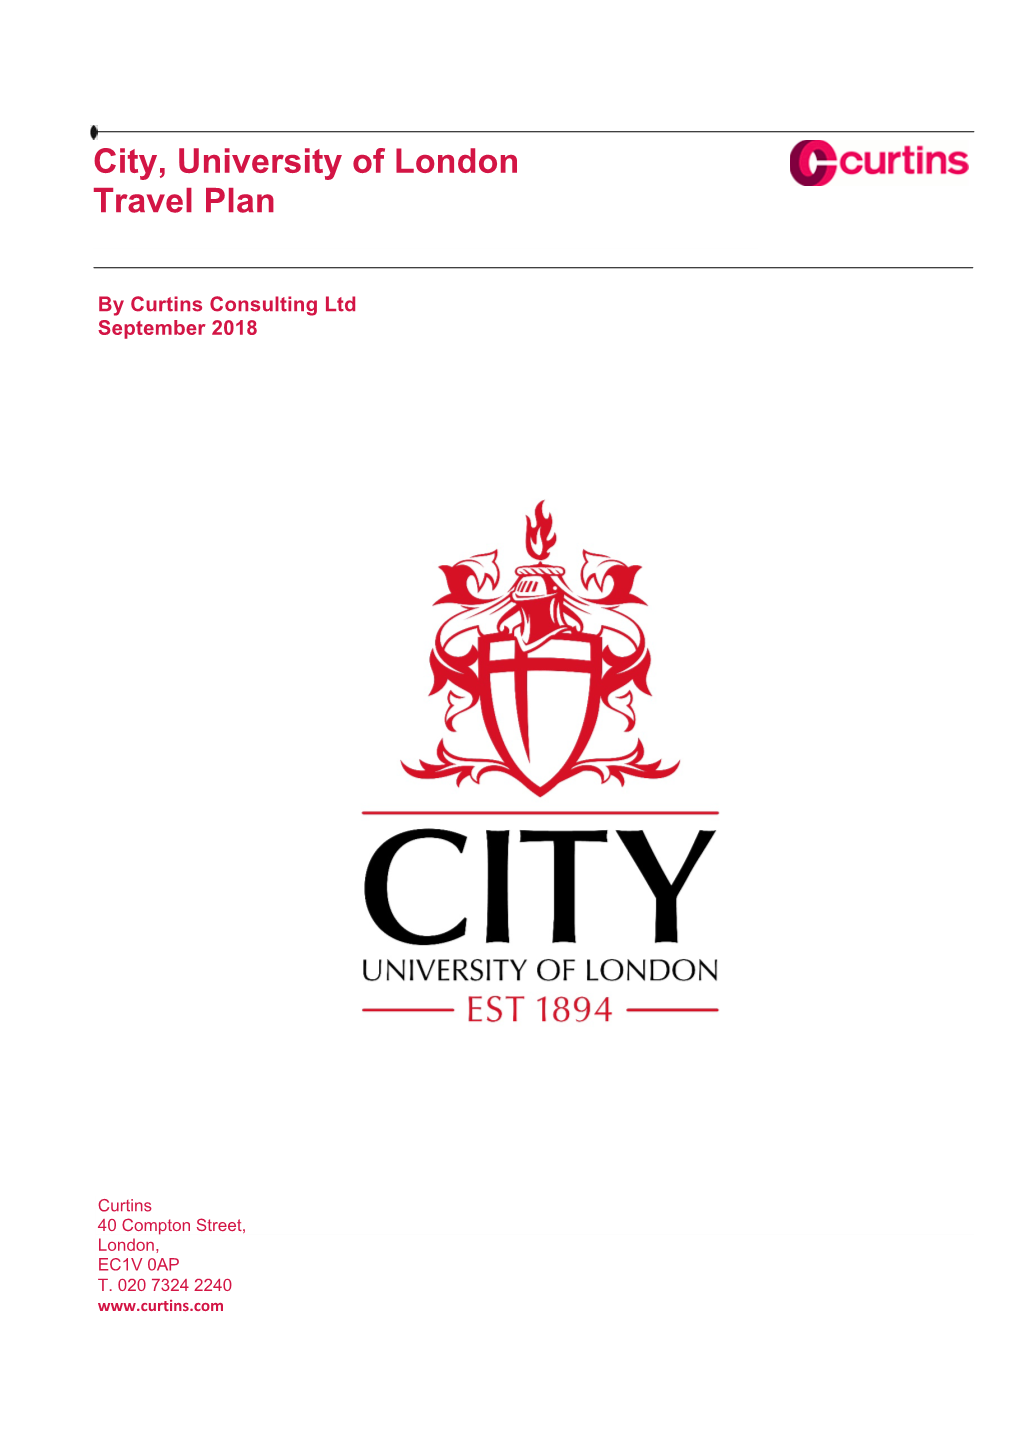 City, University of London Travel Plan